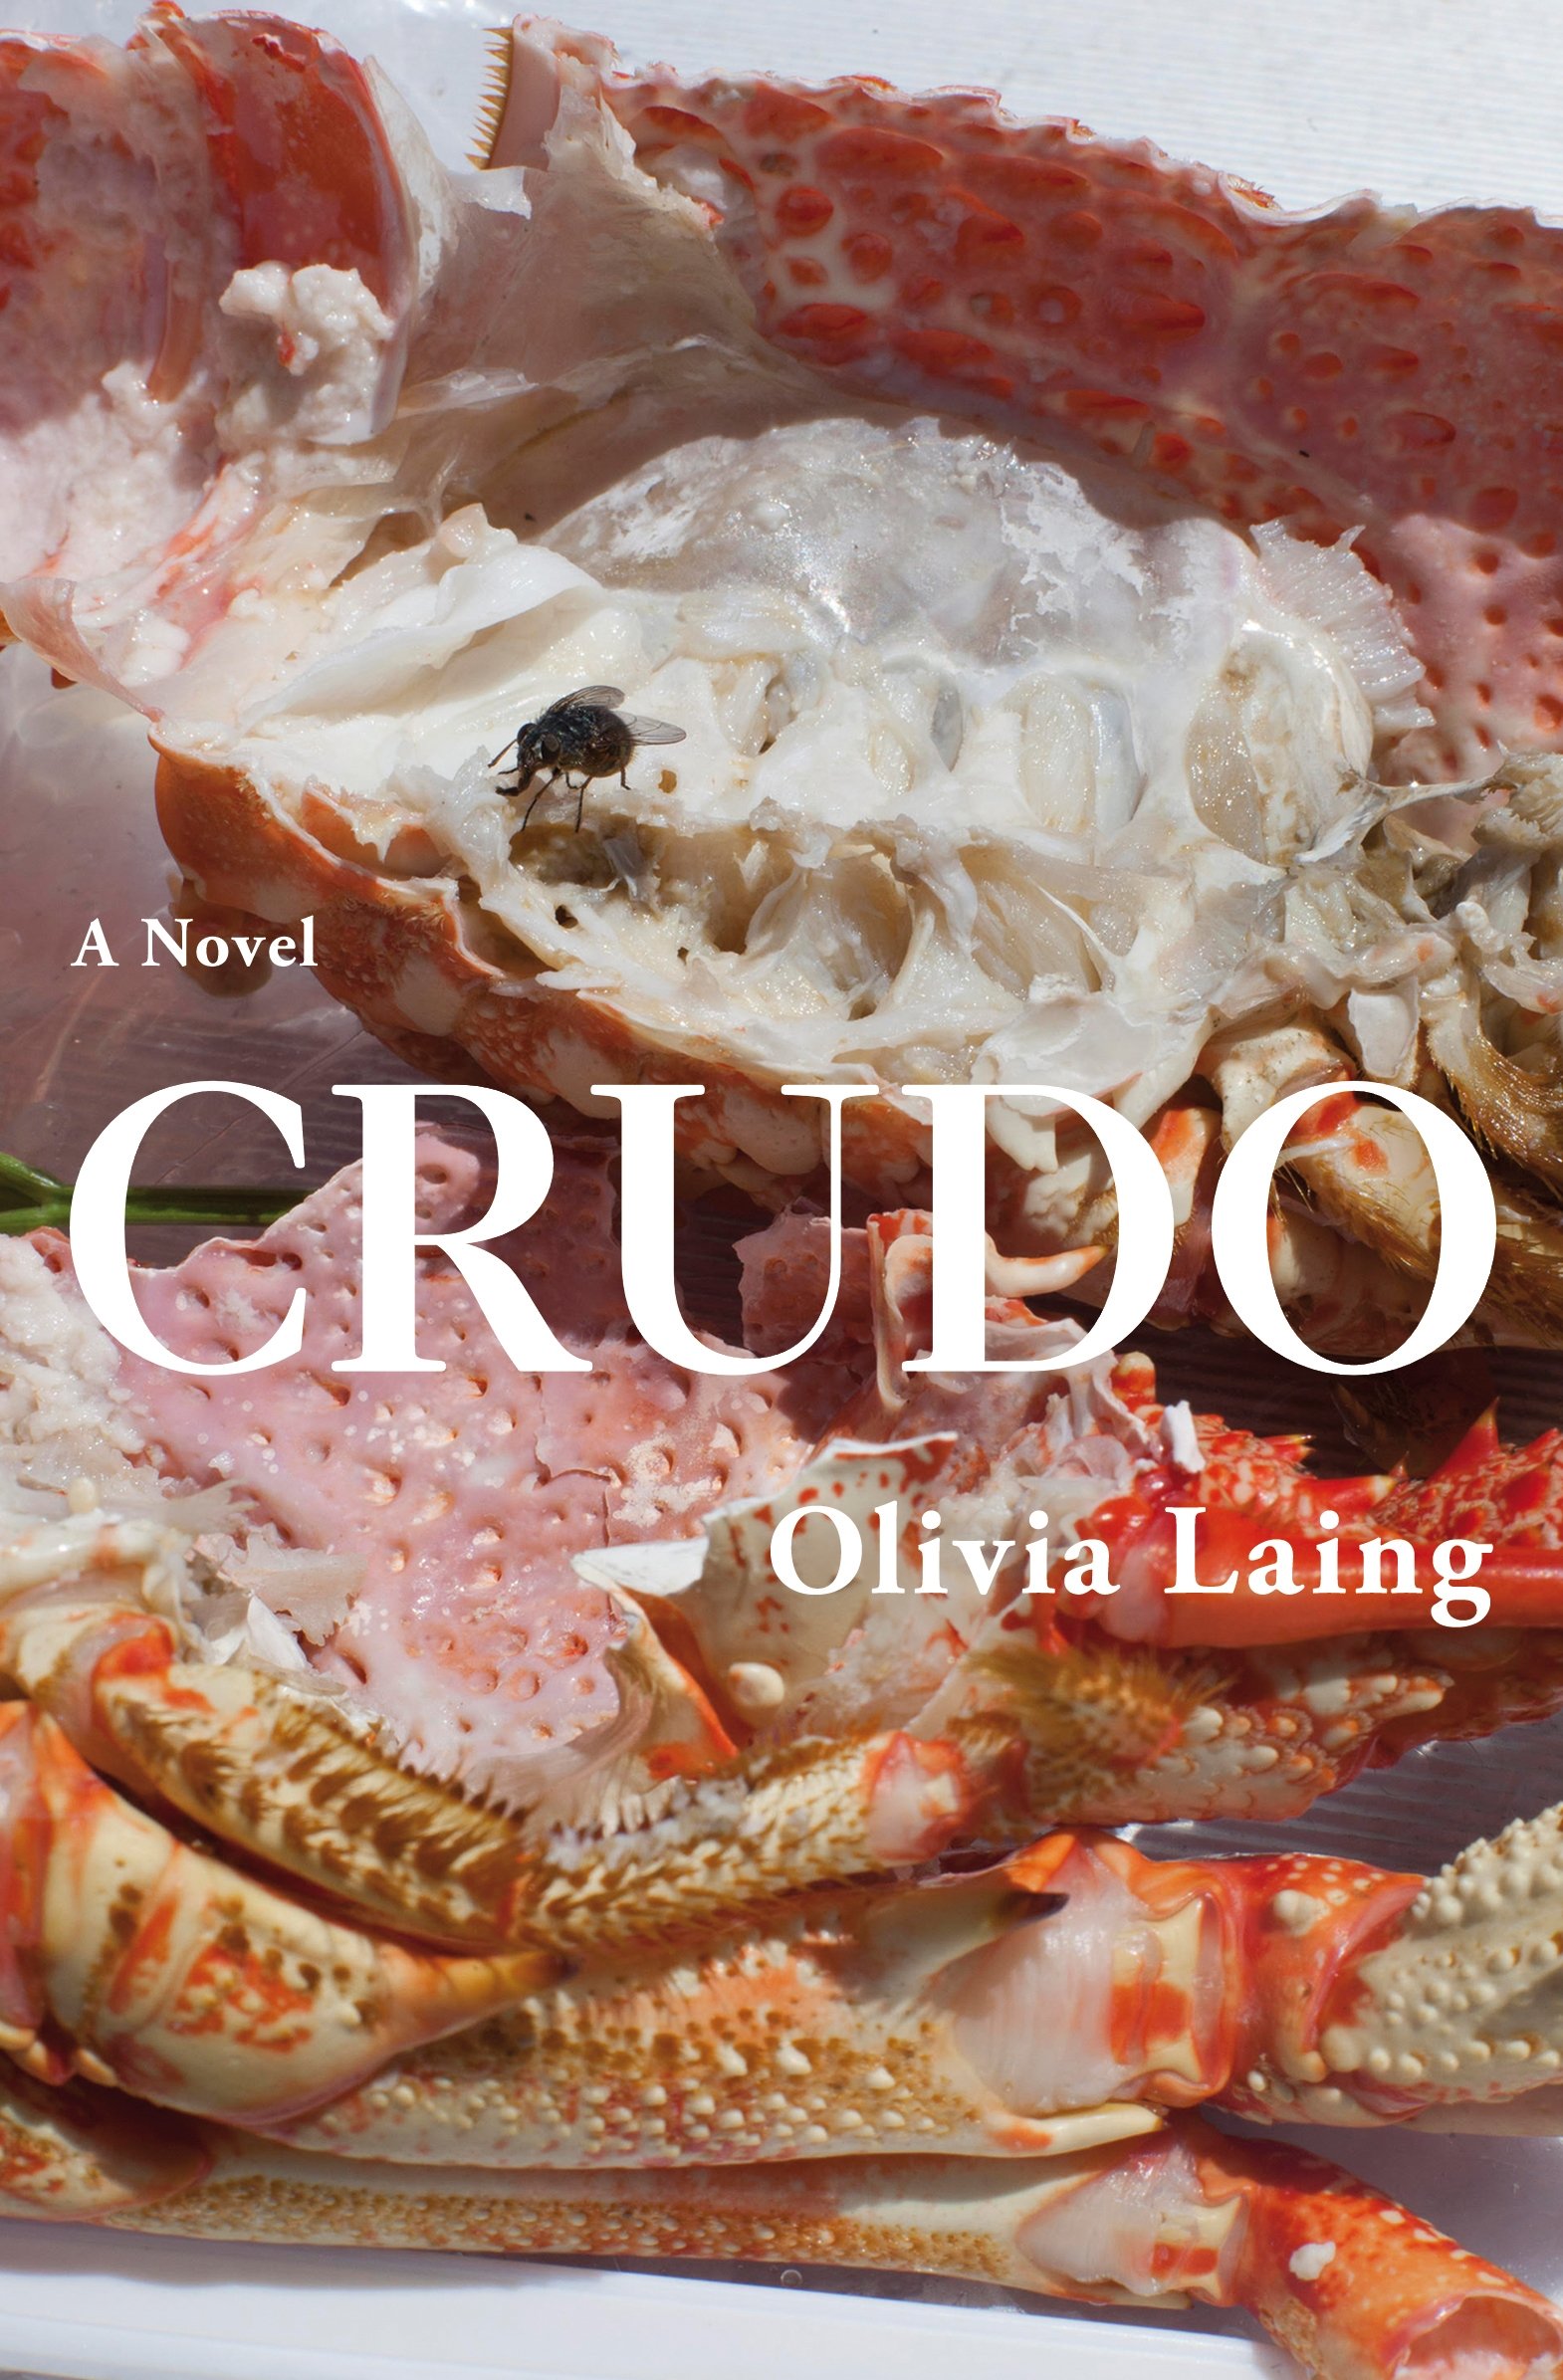 crudo olivia laing novel book cover